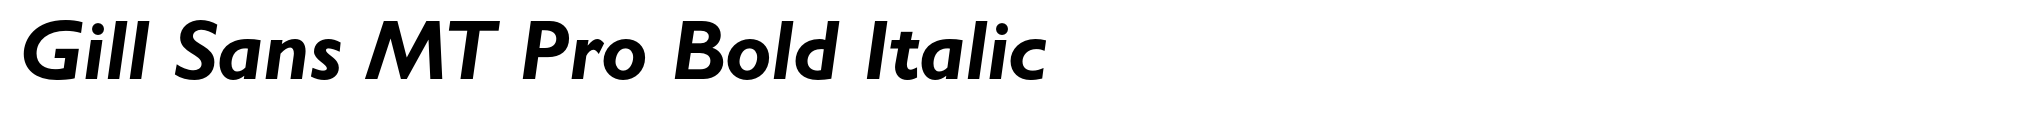 Gill Sans MT Pro Bold Italic image